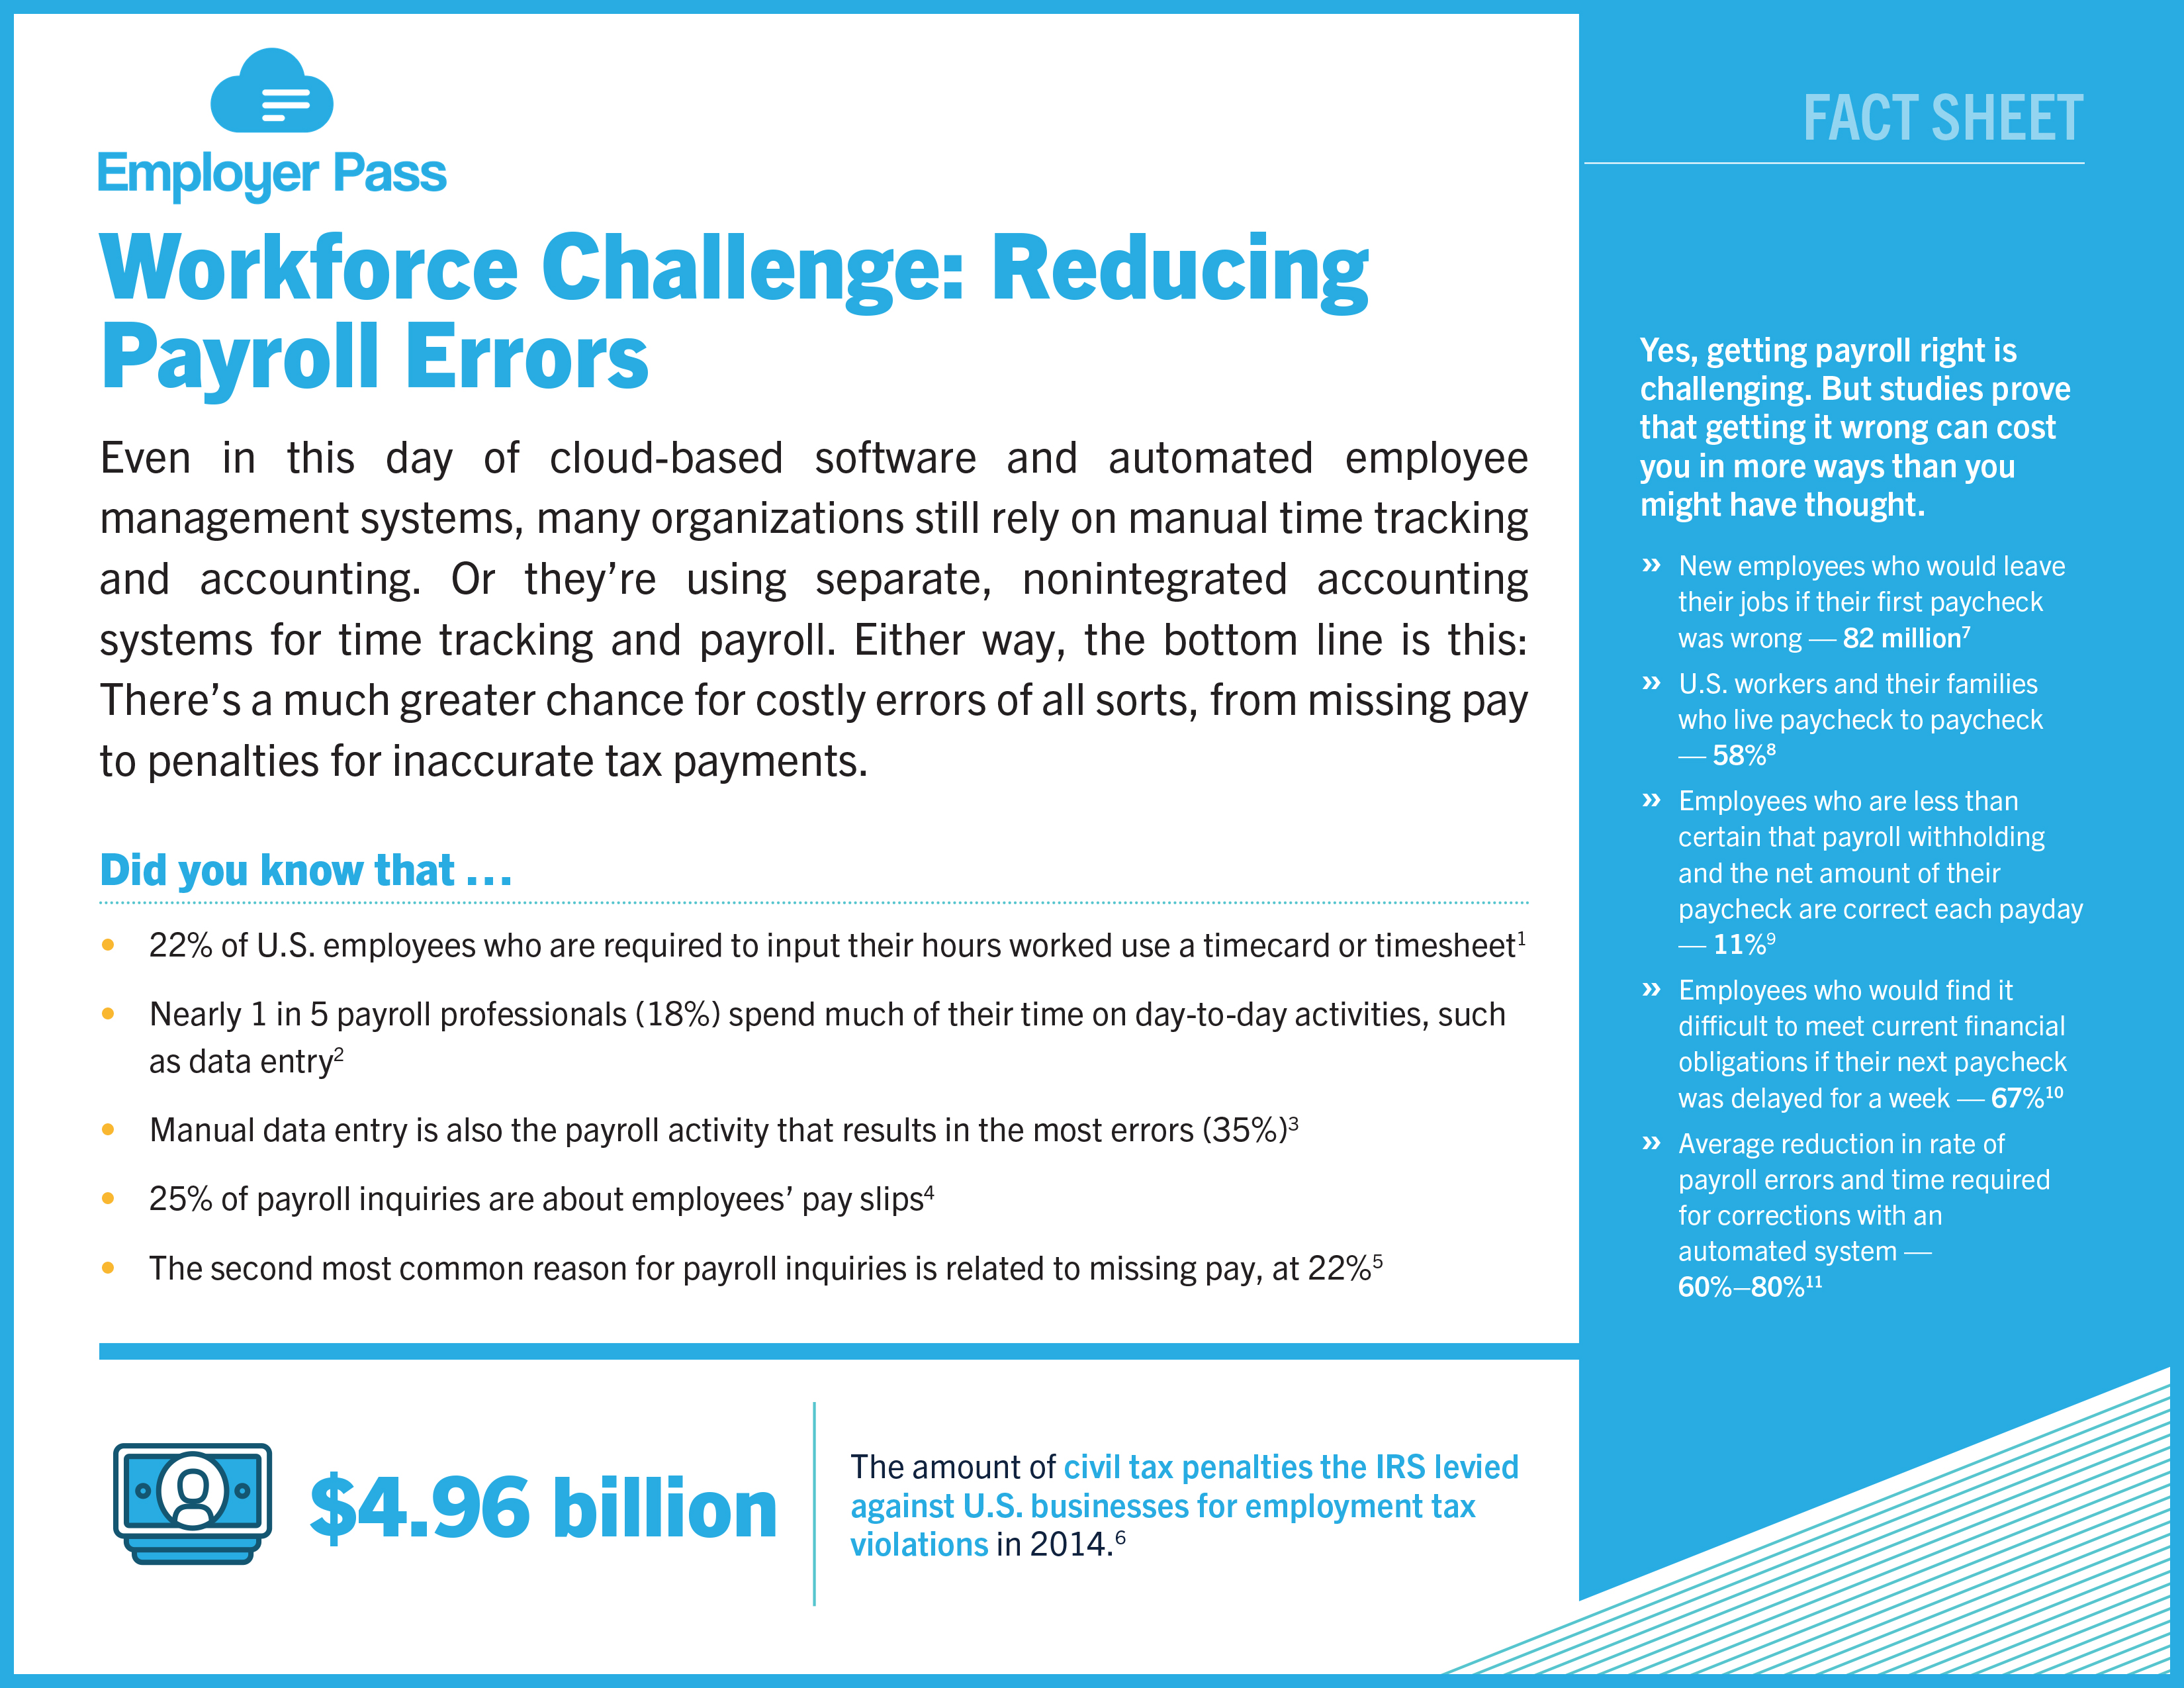 reducing-payroll-errors-fact-sheet-cover